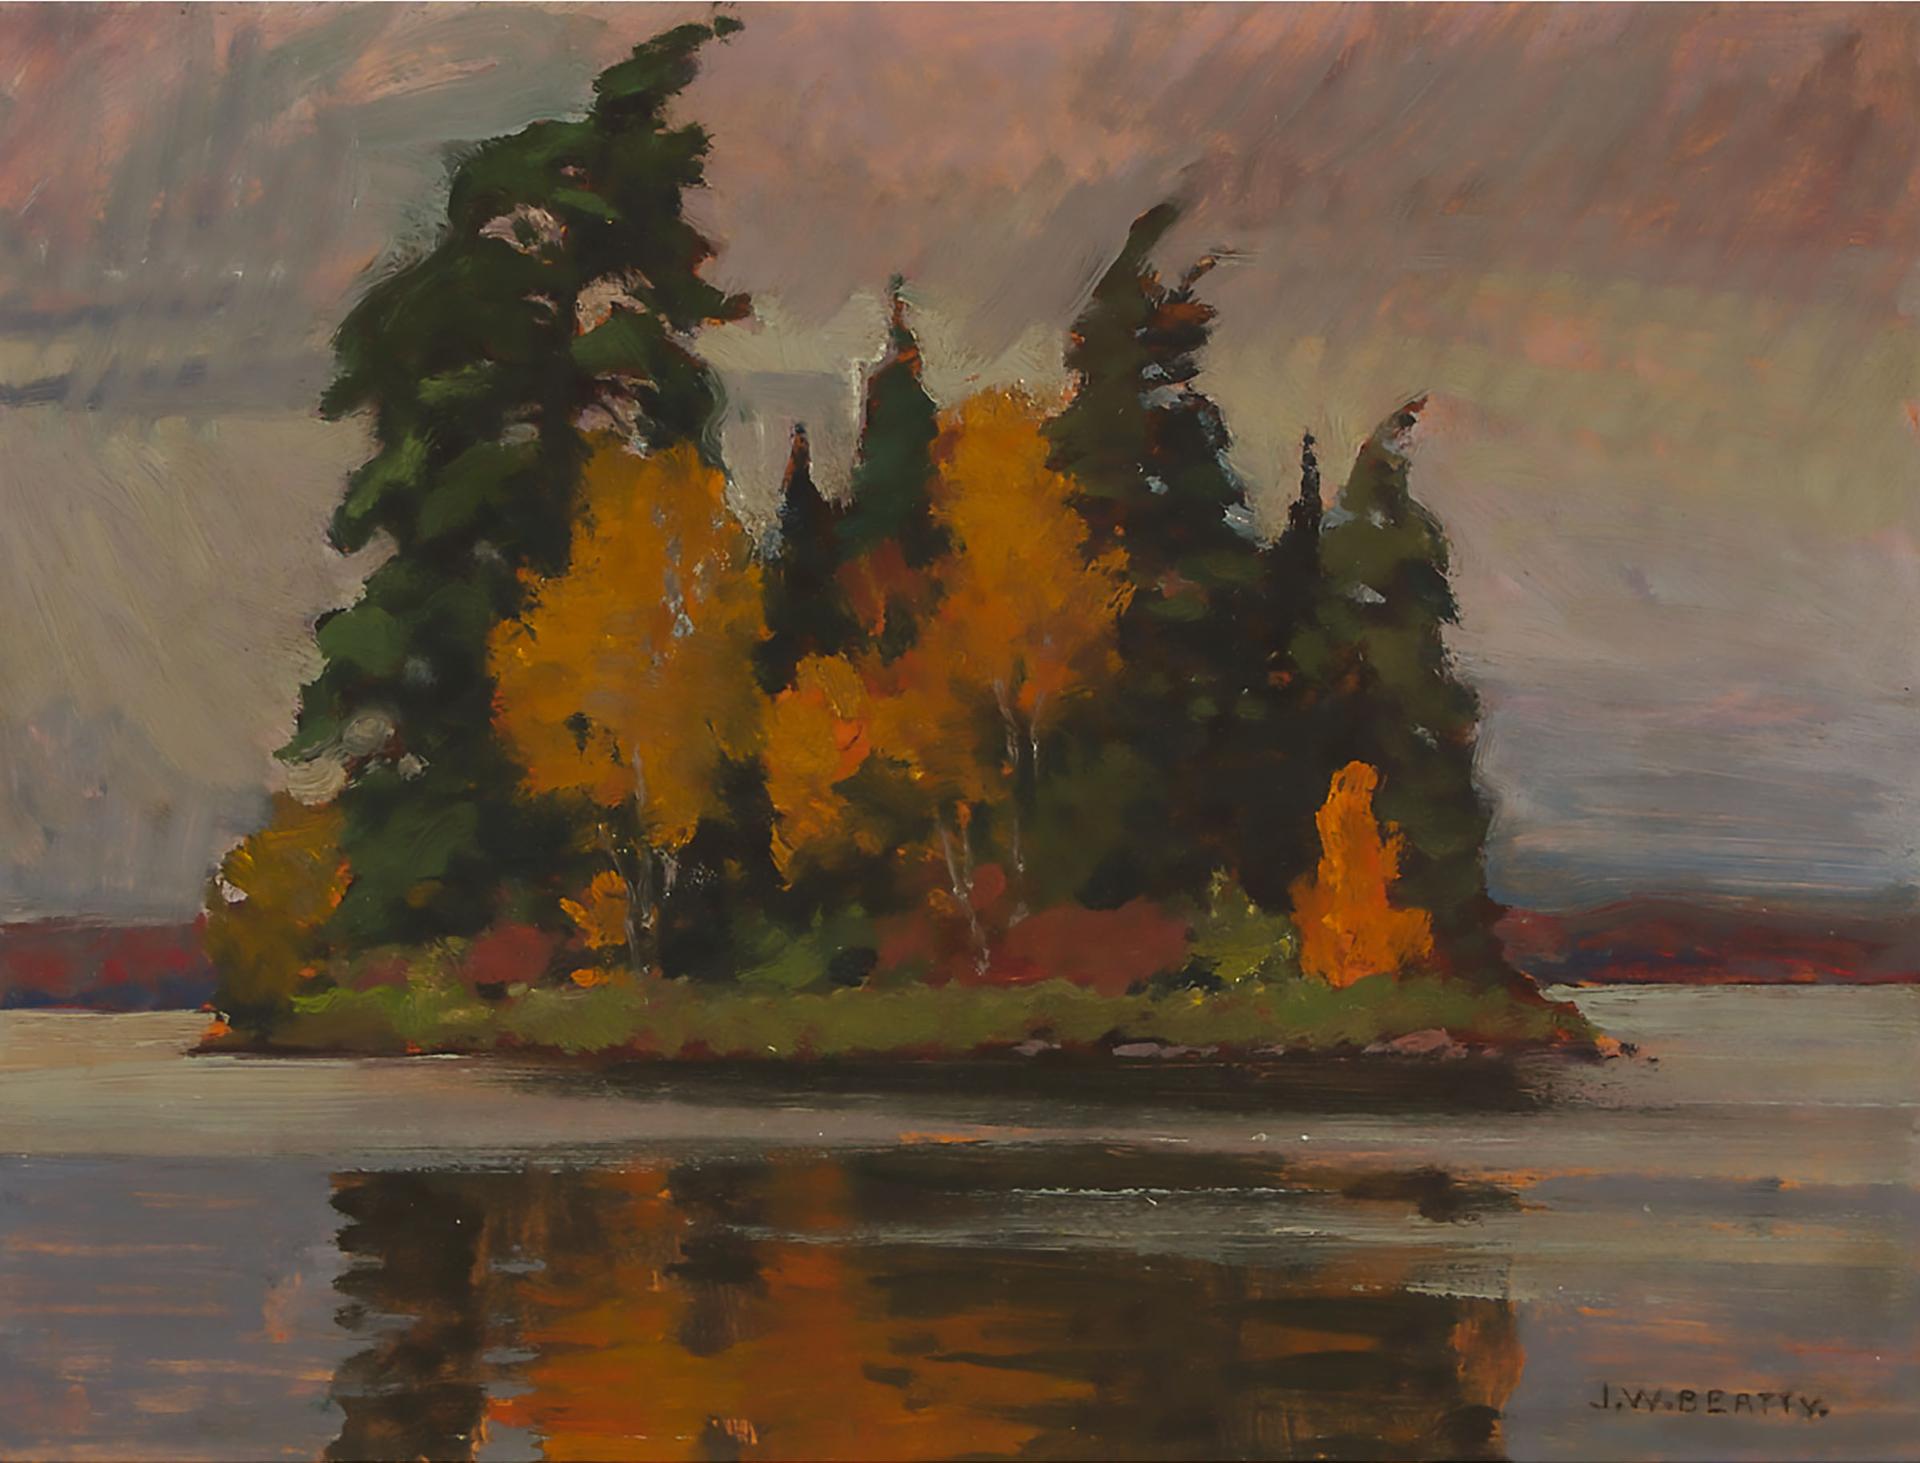 John William (J.W.) Beatty (1869-1941) - Autumn, Algonquin Park, 1920